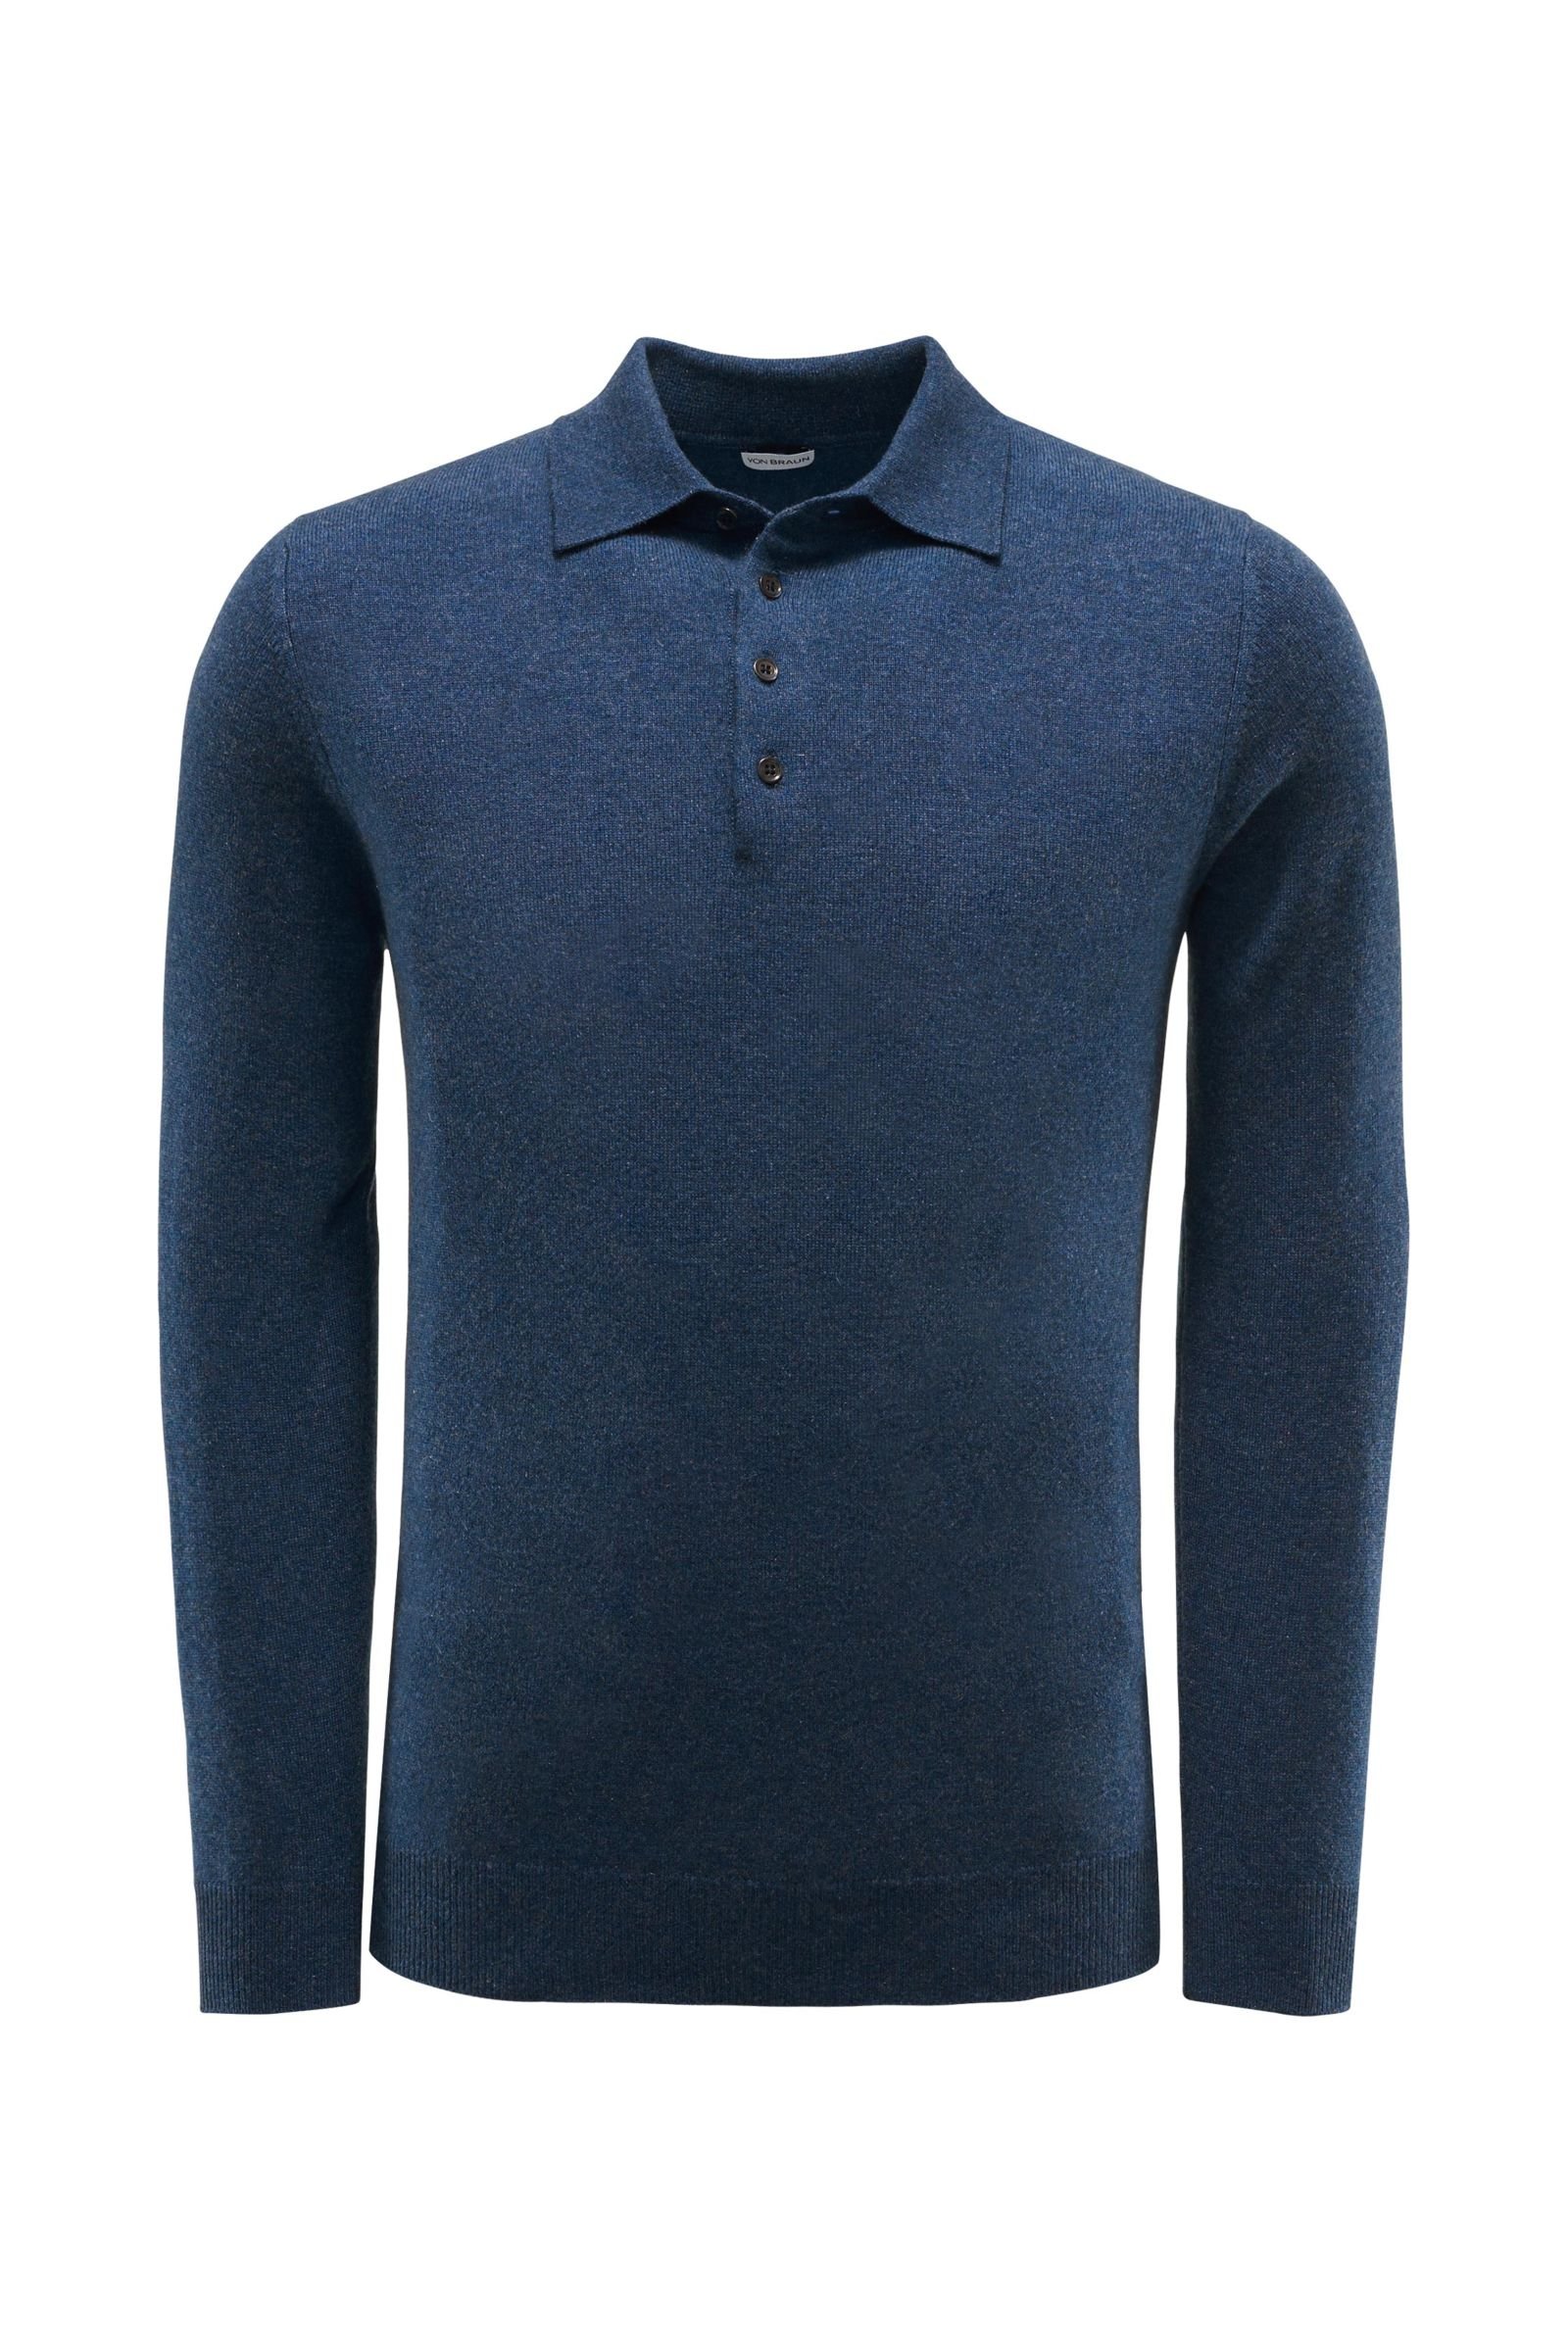 Cashmere knit polo grey-blue